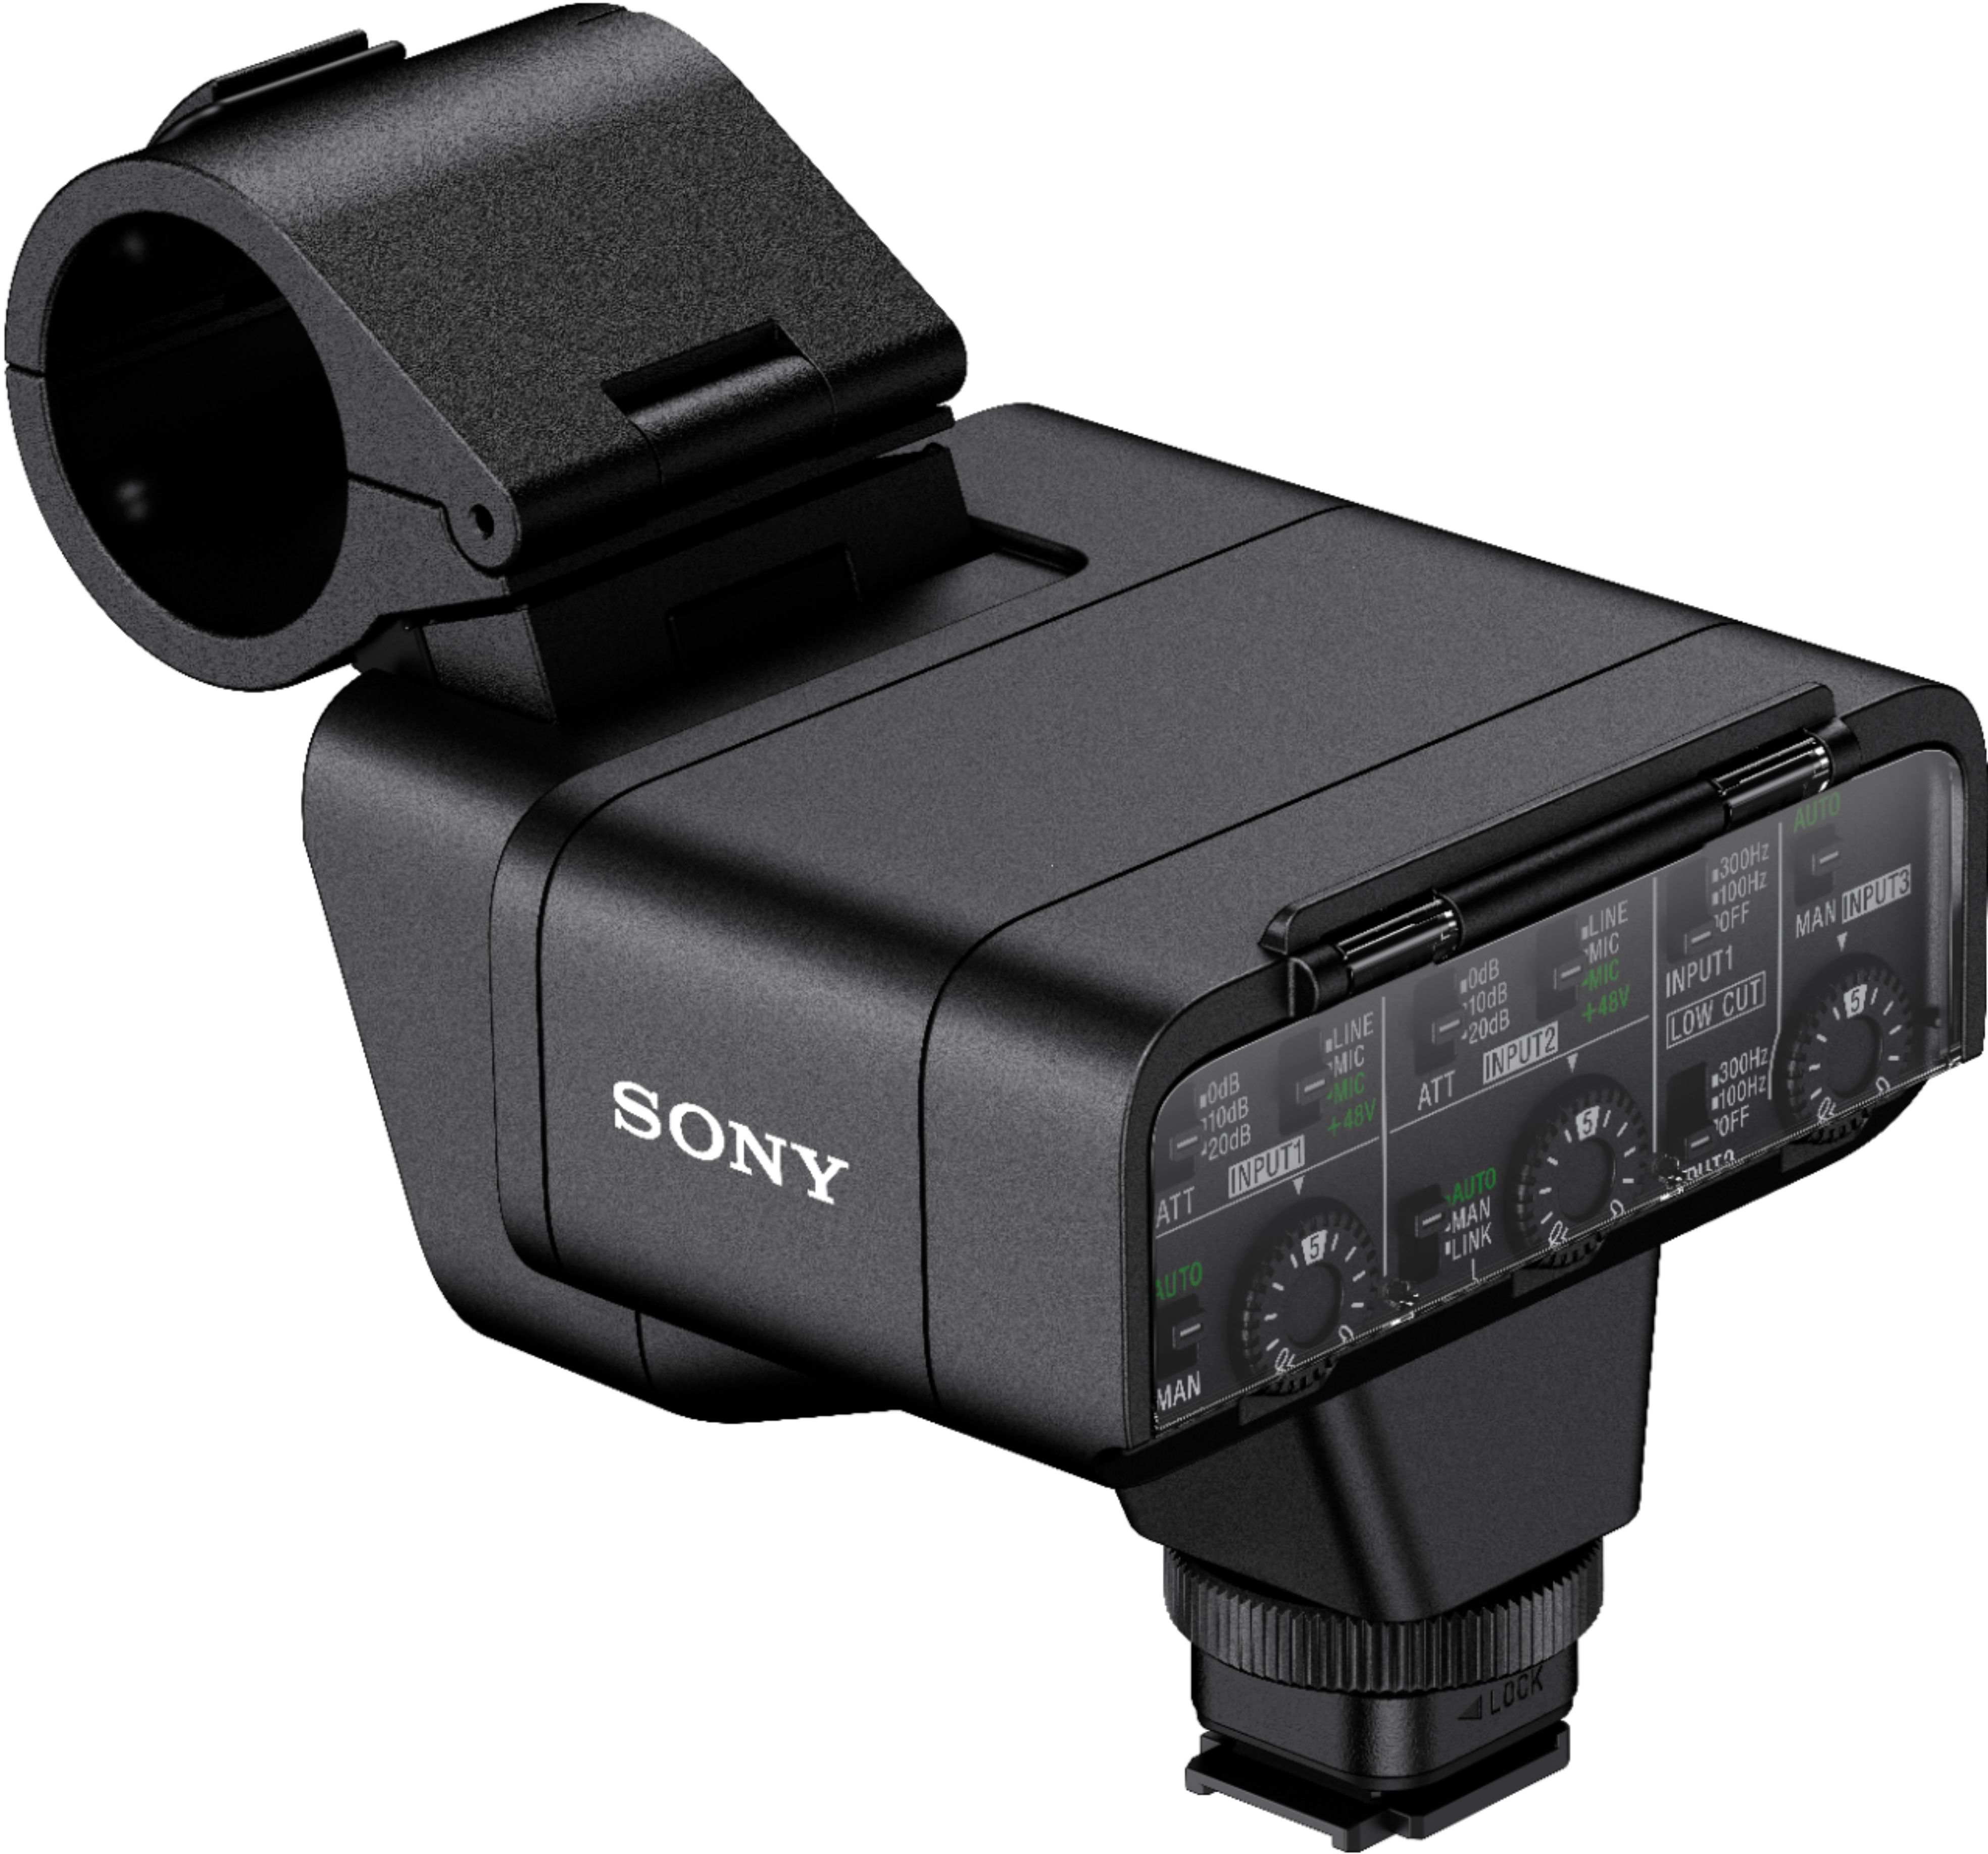 Sony – Alpha Digital XLR Adaptor Kit with Microphone